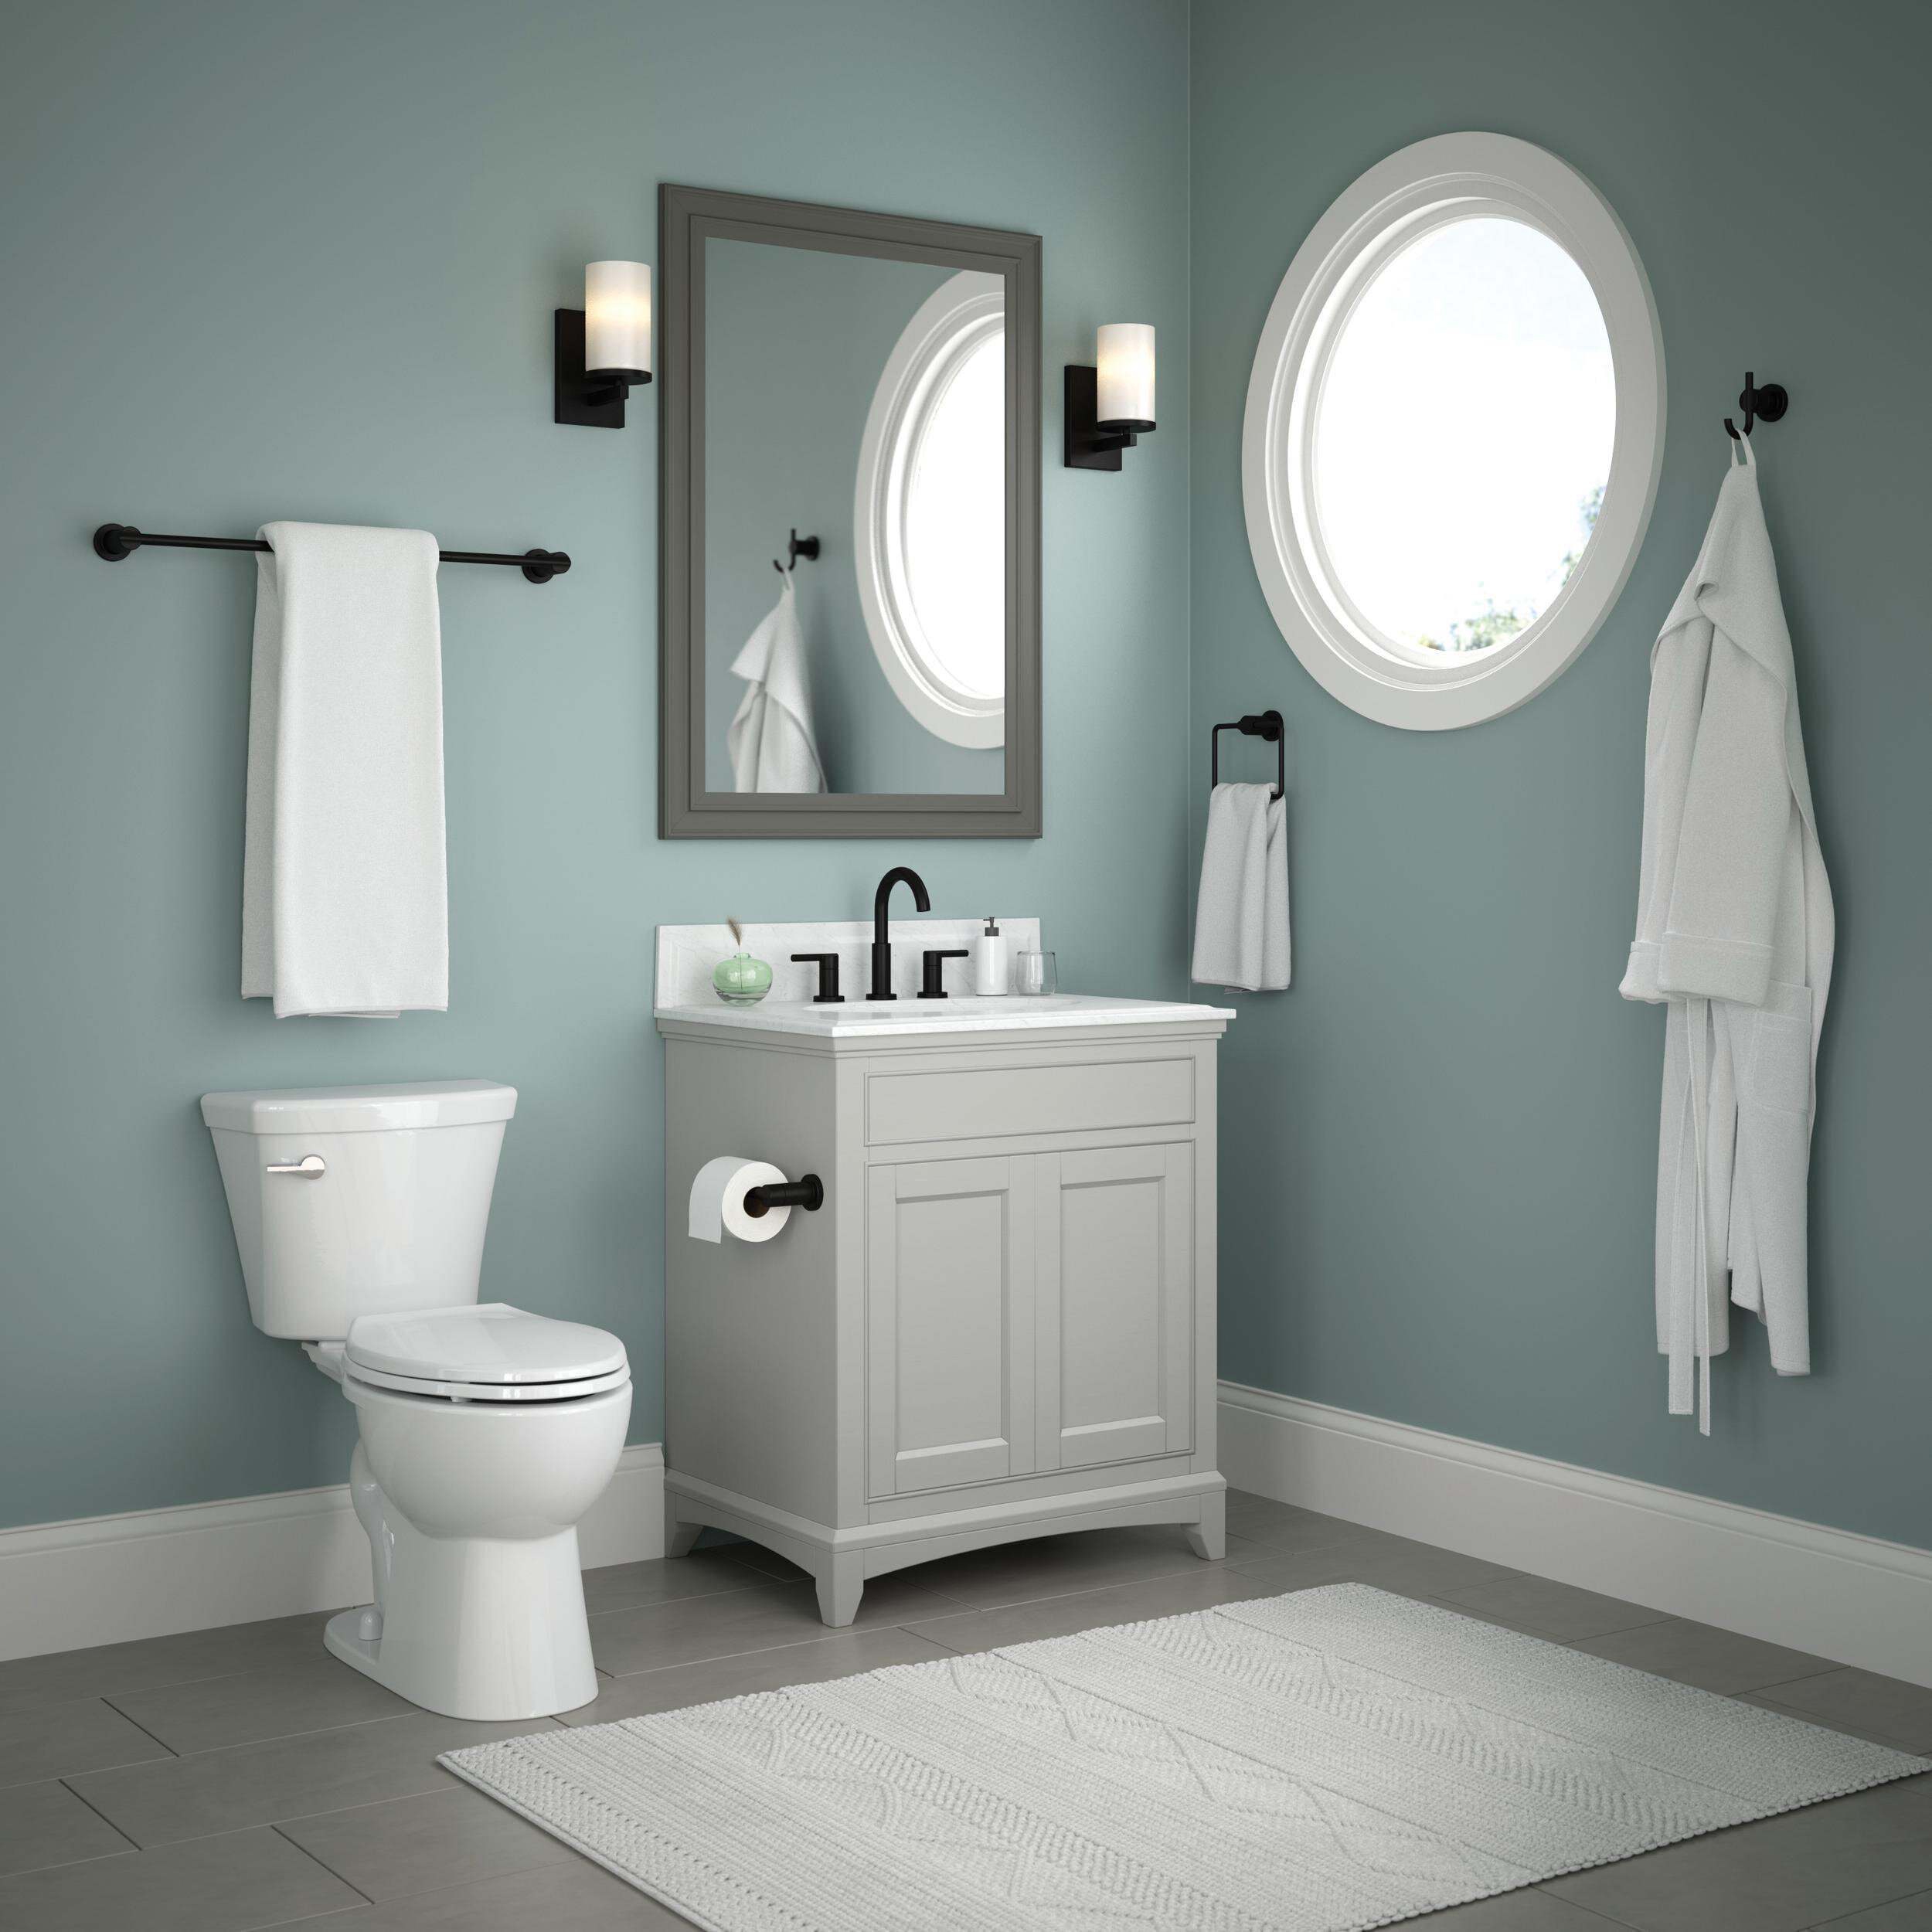 Bathroom Chrome Towel Rack/Toilet Paper Holder/Shelf/Hook Wall Mount  Accessories